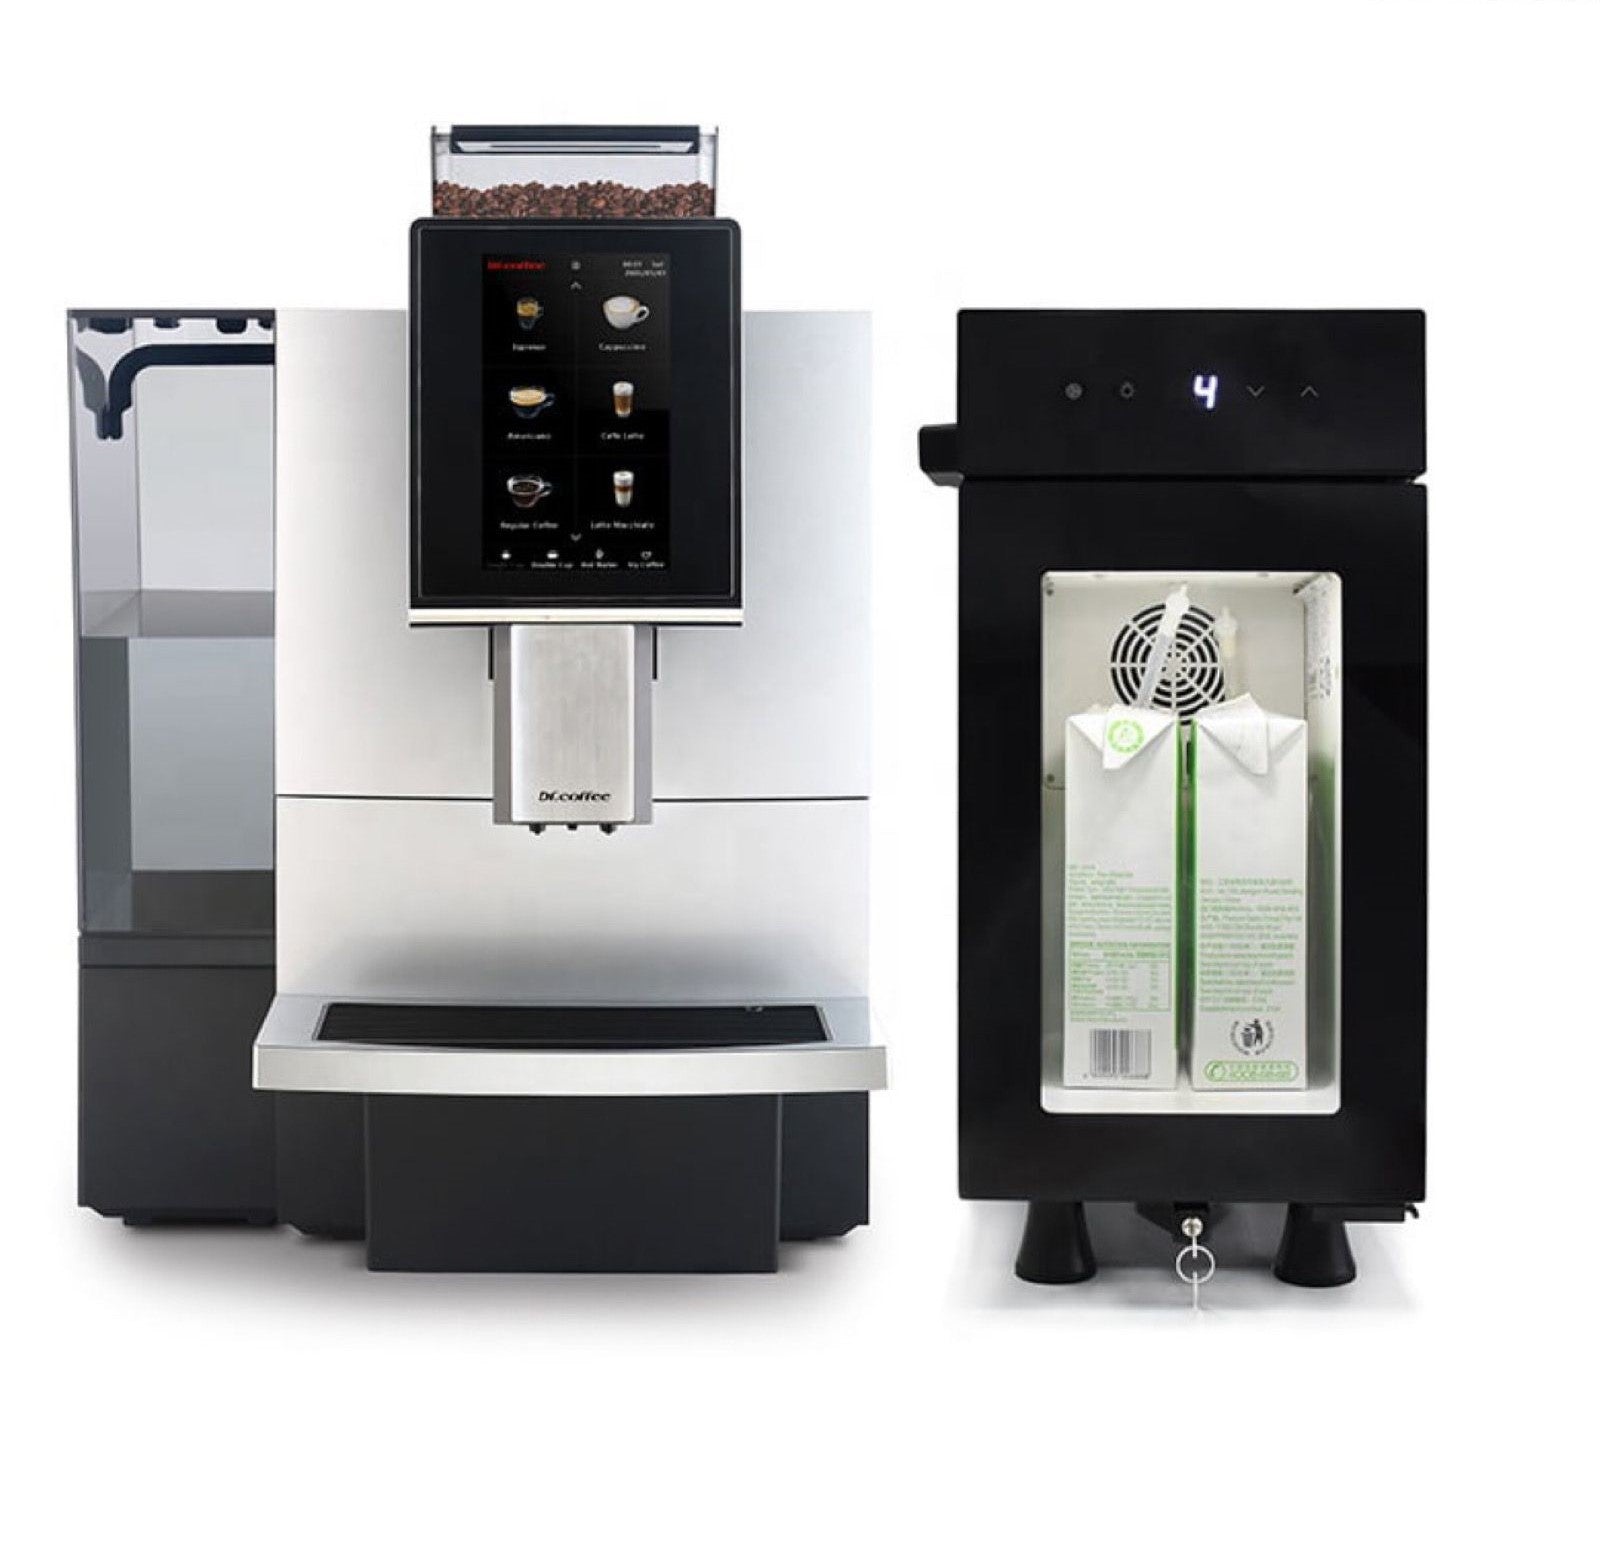 Fully automatic coffee machine with milk fridge